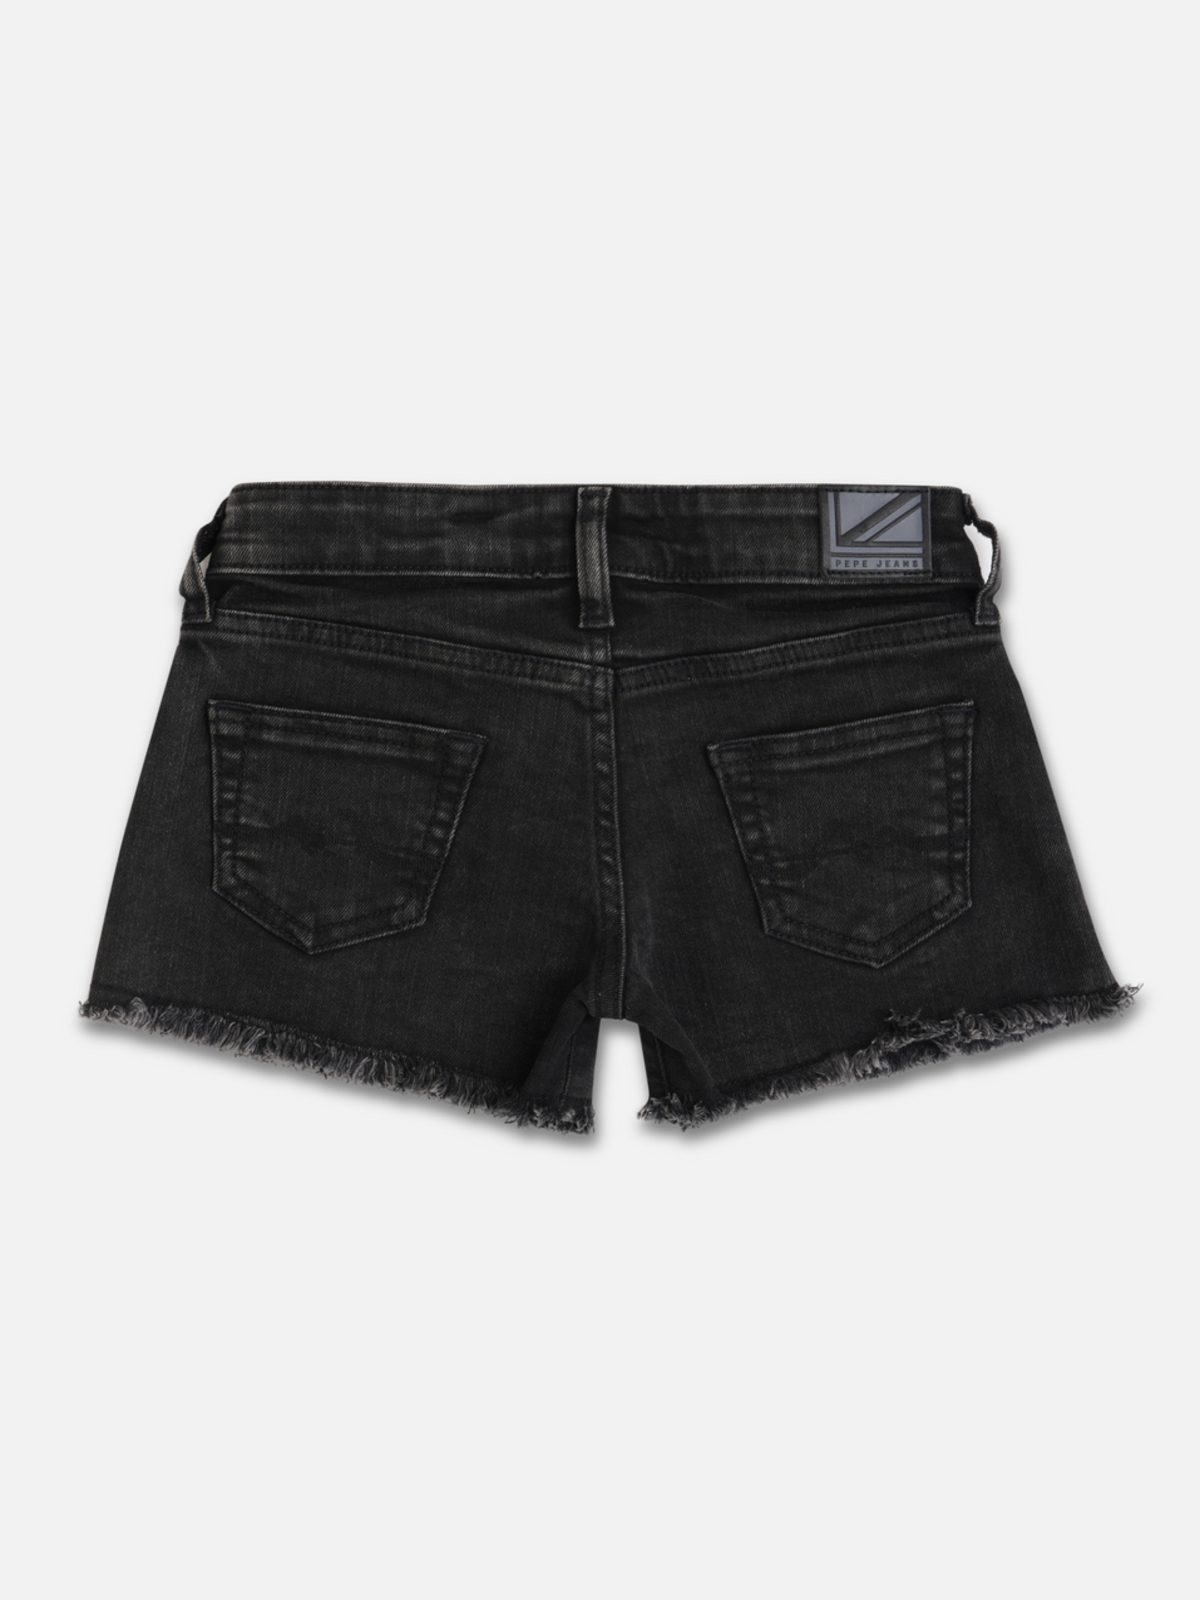 Men's Original Solids: Carbon Black Denim Shorts